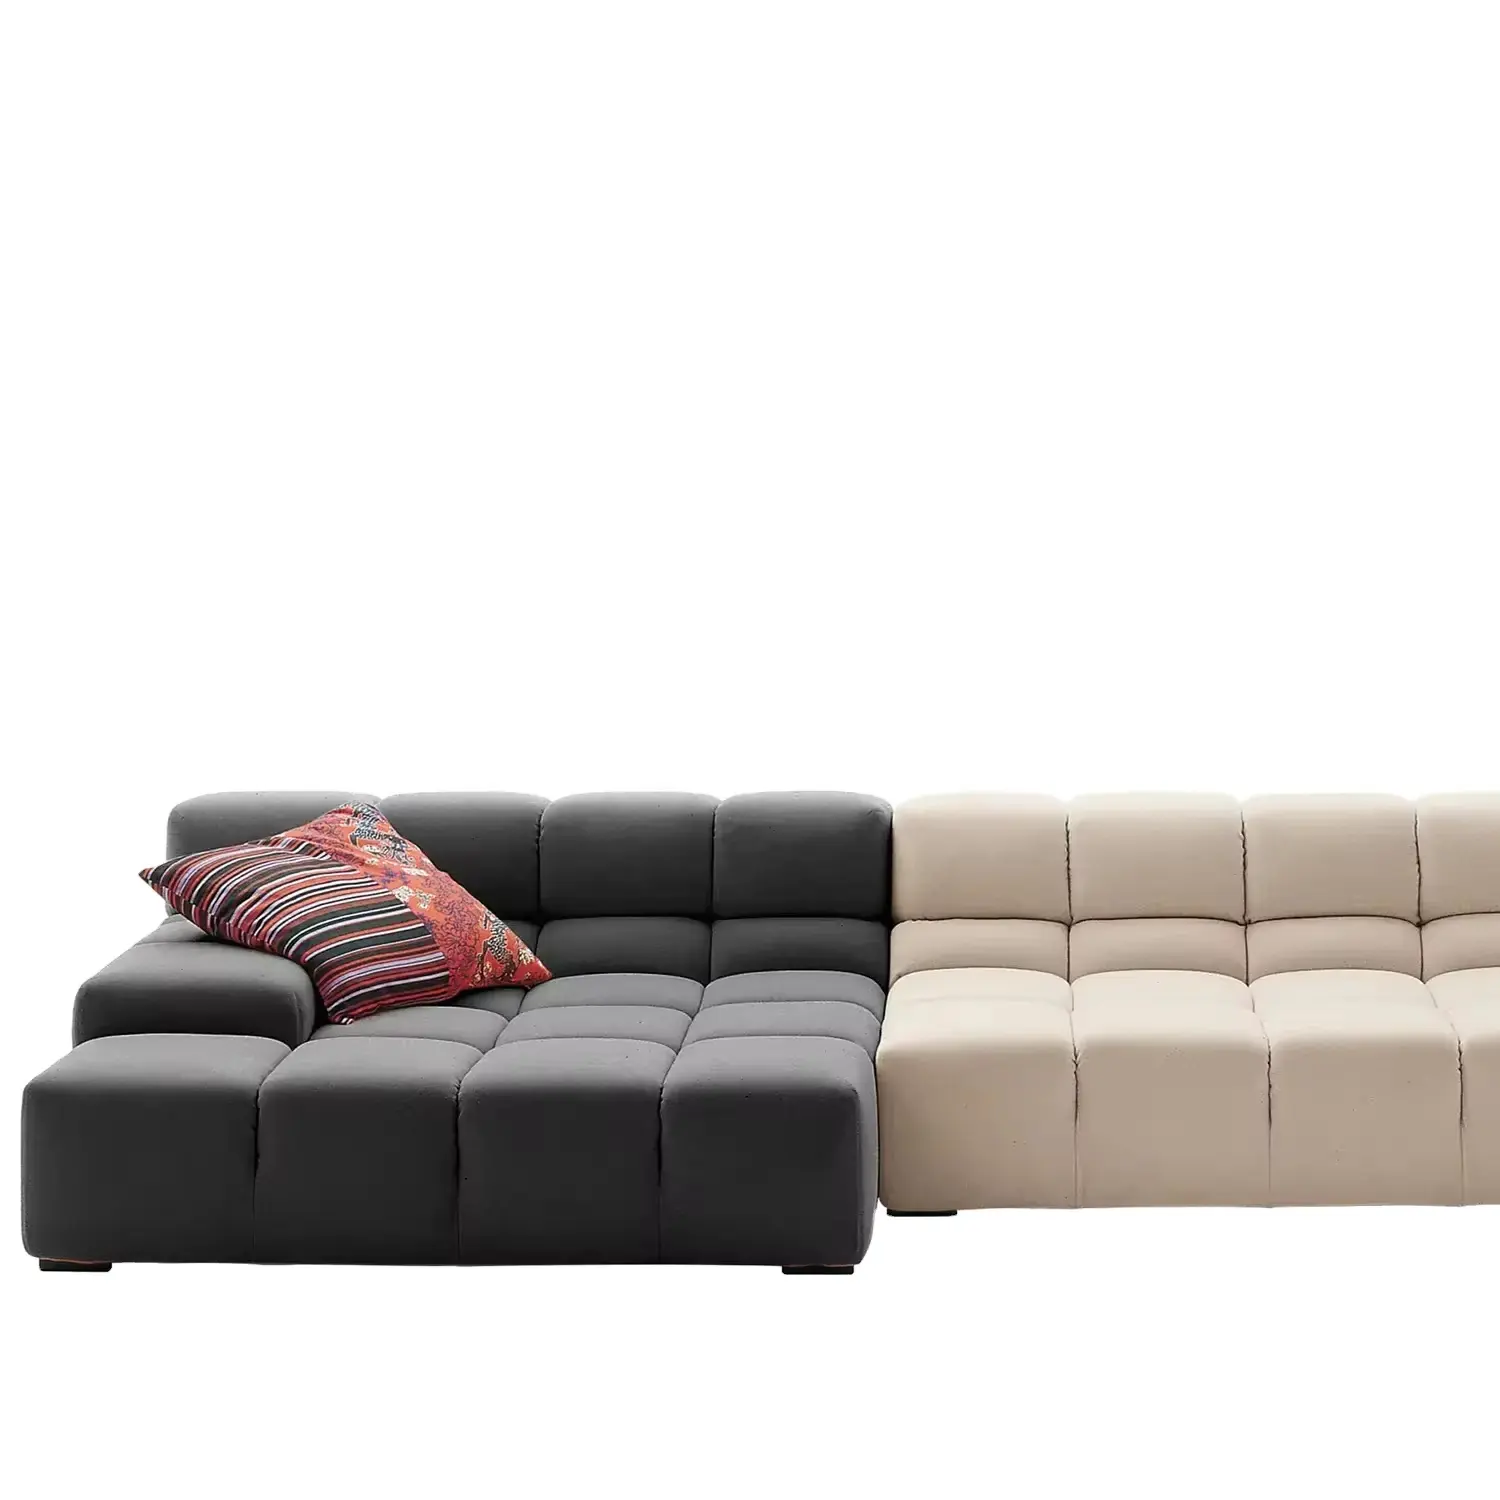 Lüks tarzı modüler kanepe kadife kumaş kesit kanepe tuliving kanepe oturma odası için